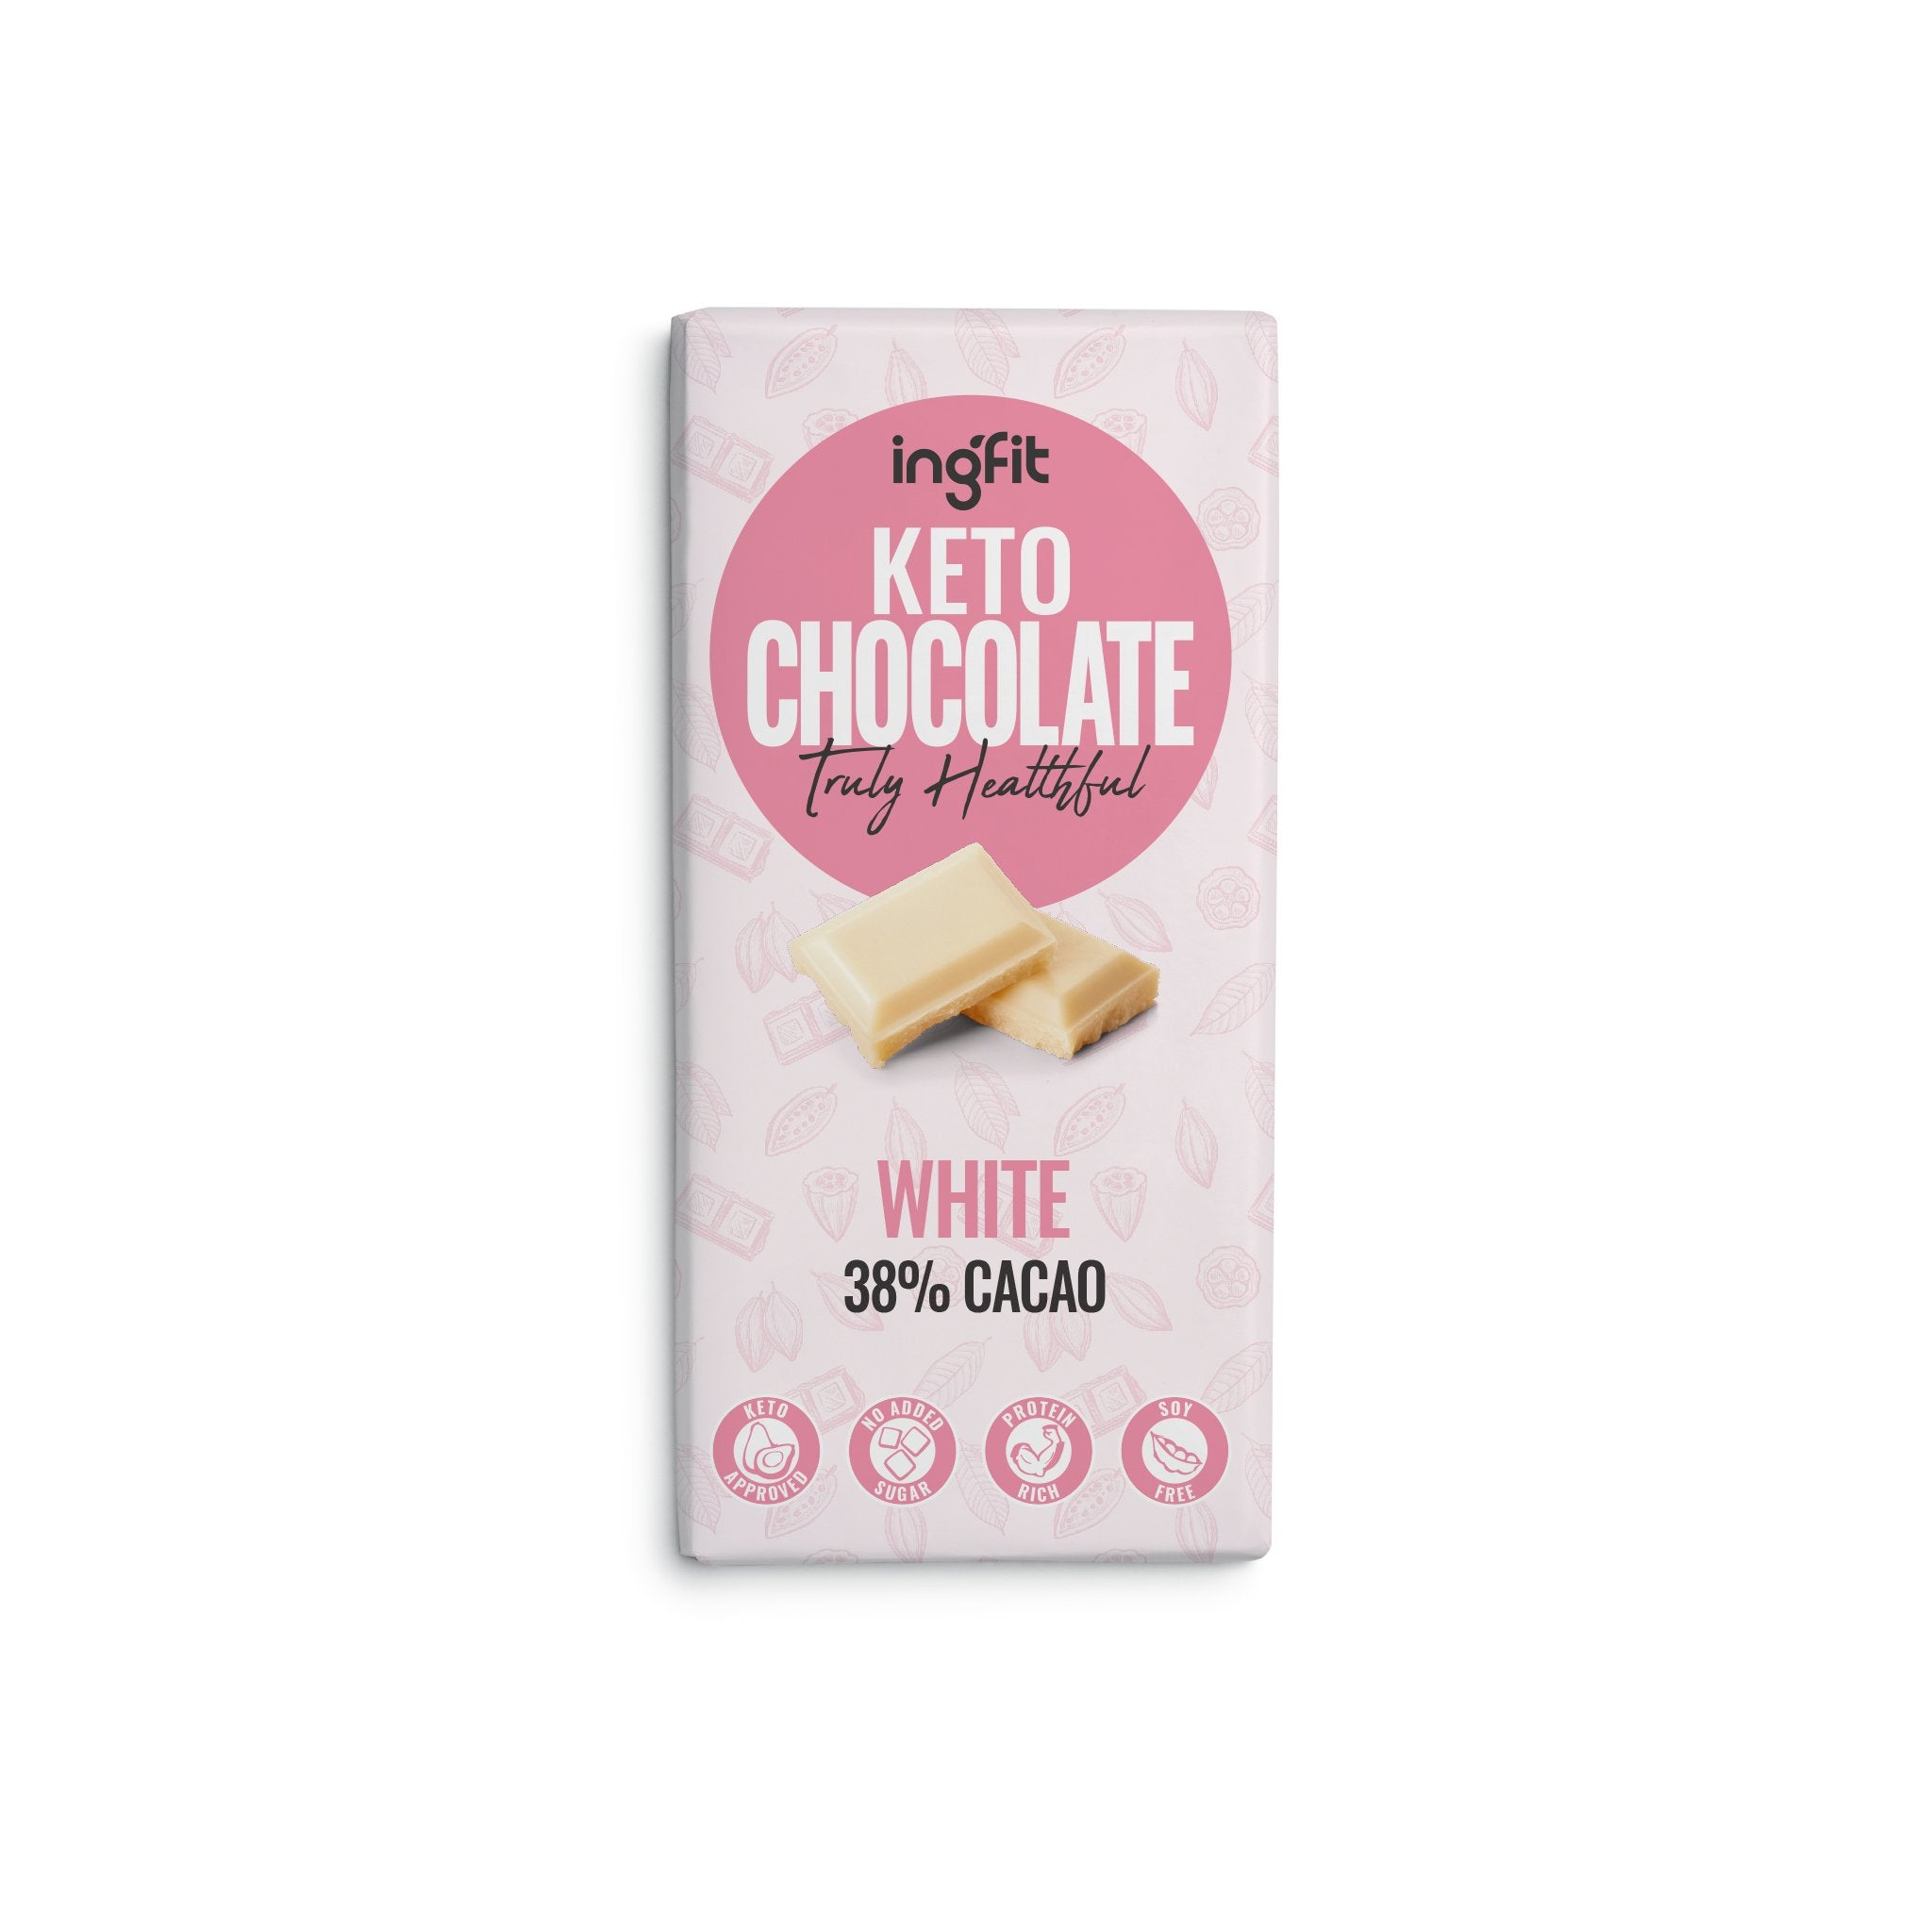 INGFIT Keto White Chocolate, 100g